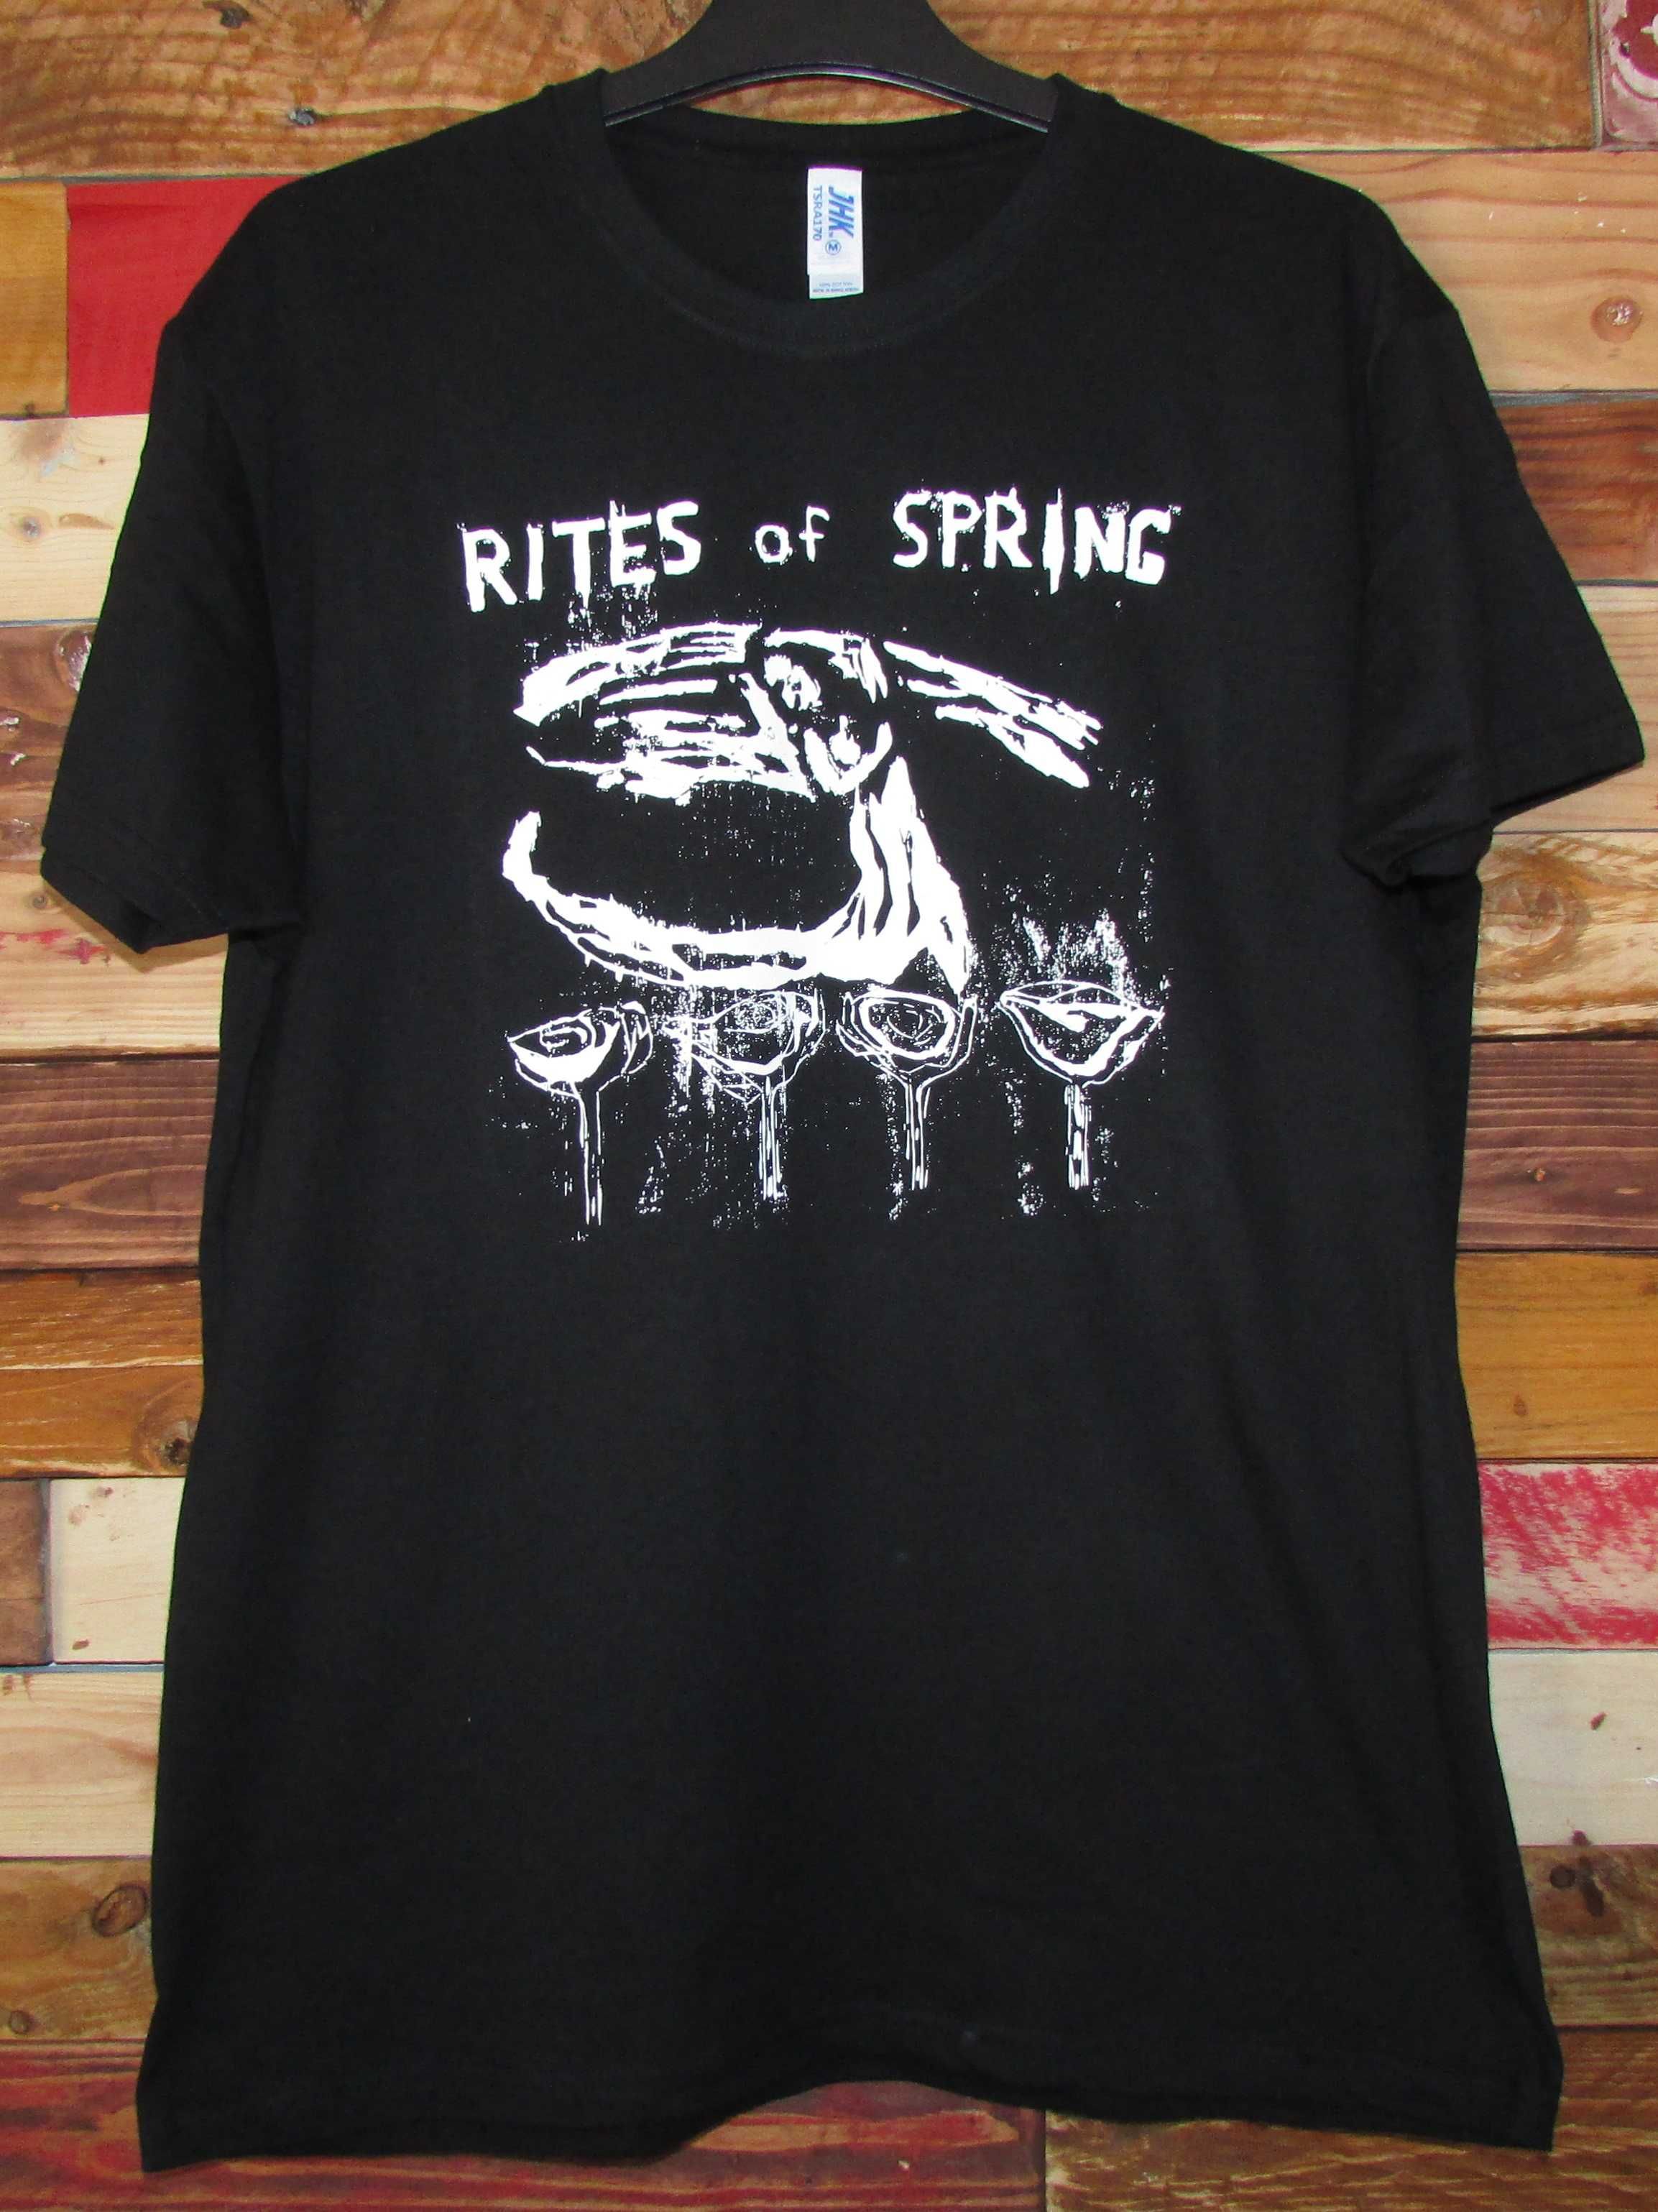 Fugazi / Rites of Spring / Hüsker Dü / At the Drive-In - T-shirt